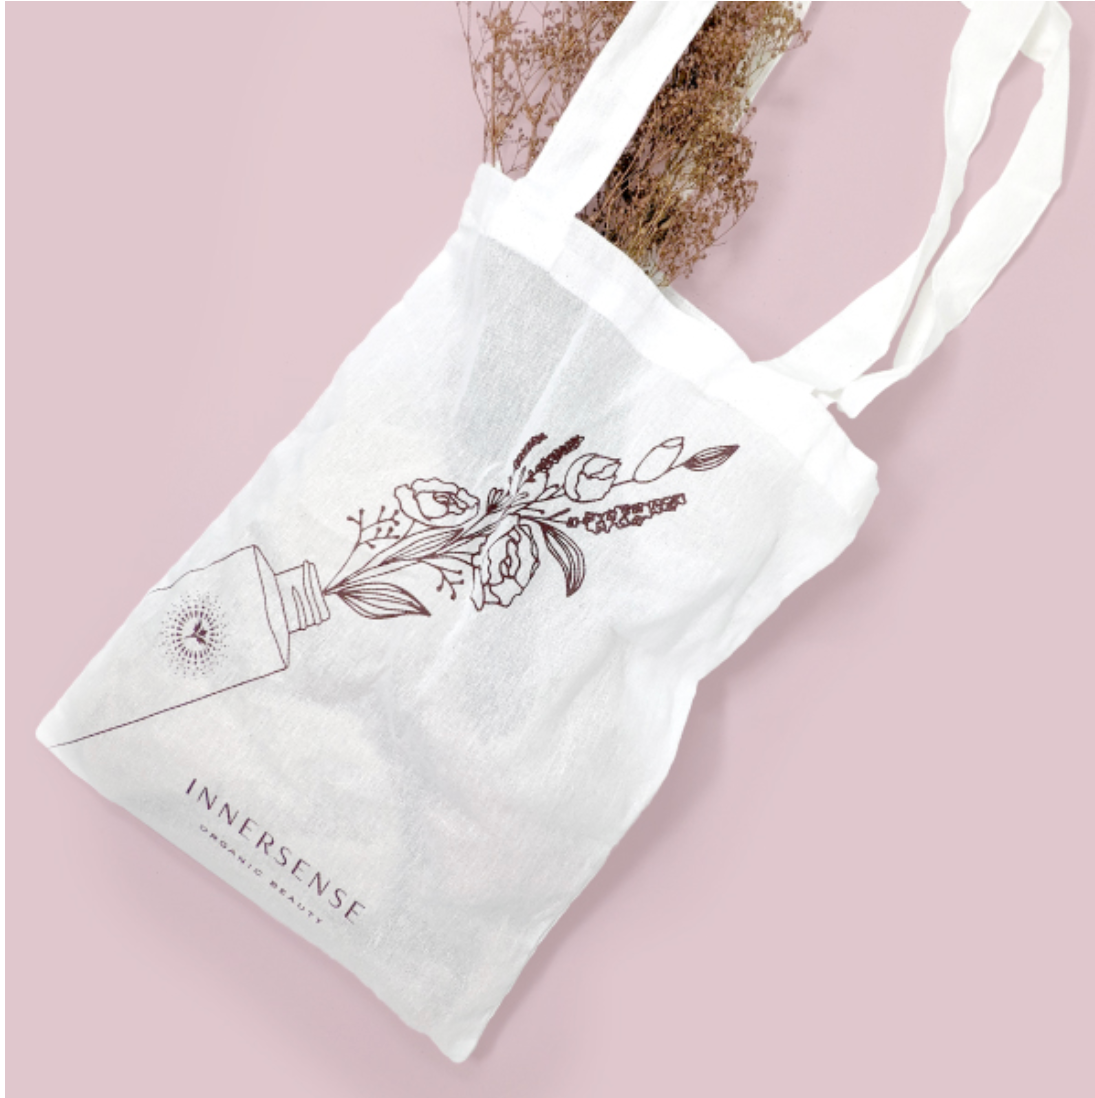 Innersense Organic Beauty Tote Bag